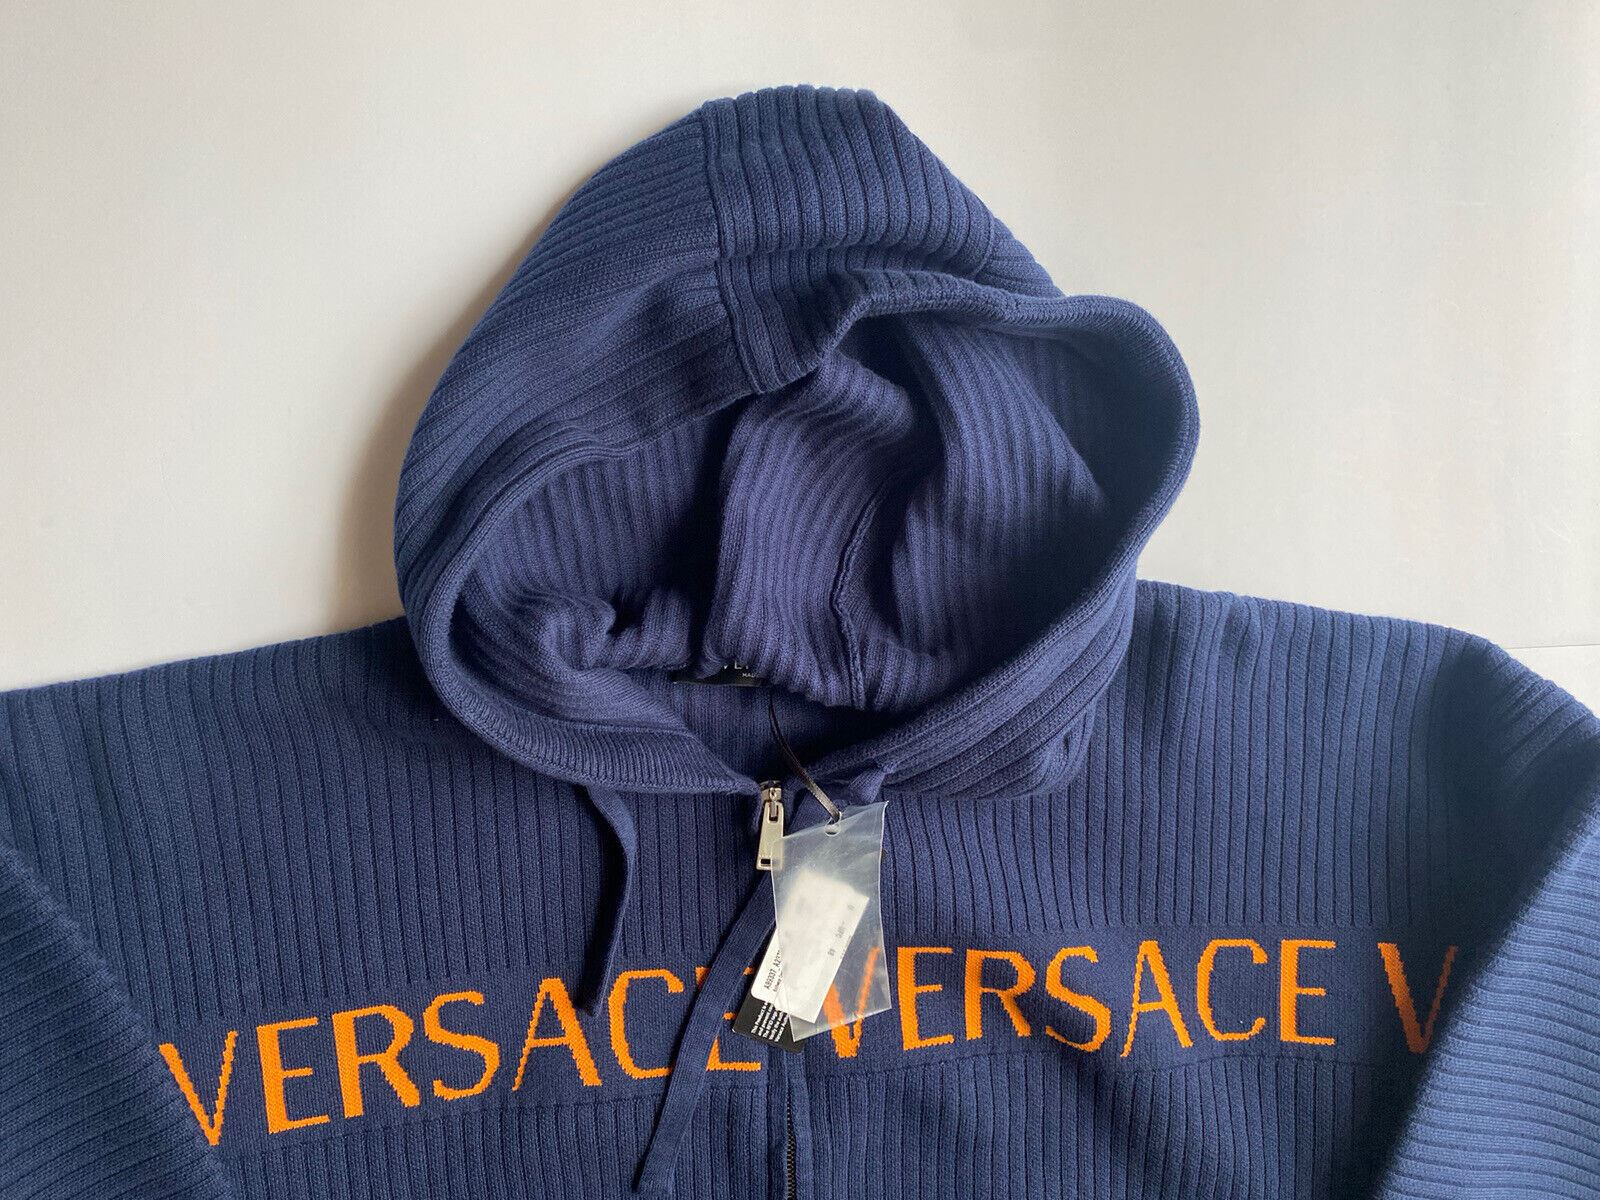 NWT 995 $ Versace Herren-Strickjacke mit Kapuze, Blau, 48 US (58 Euro) A237551 IT 